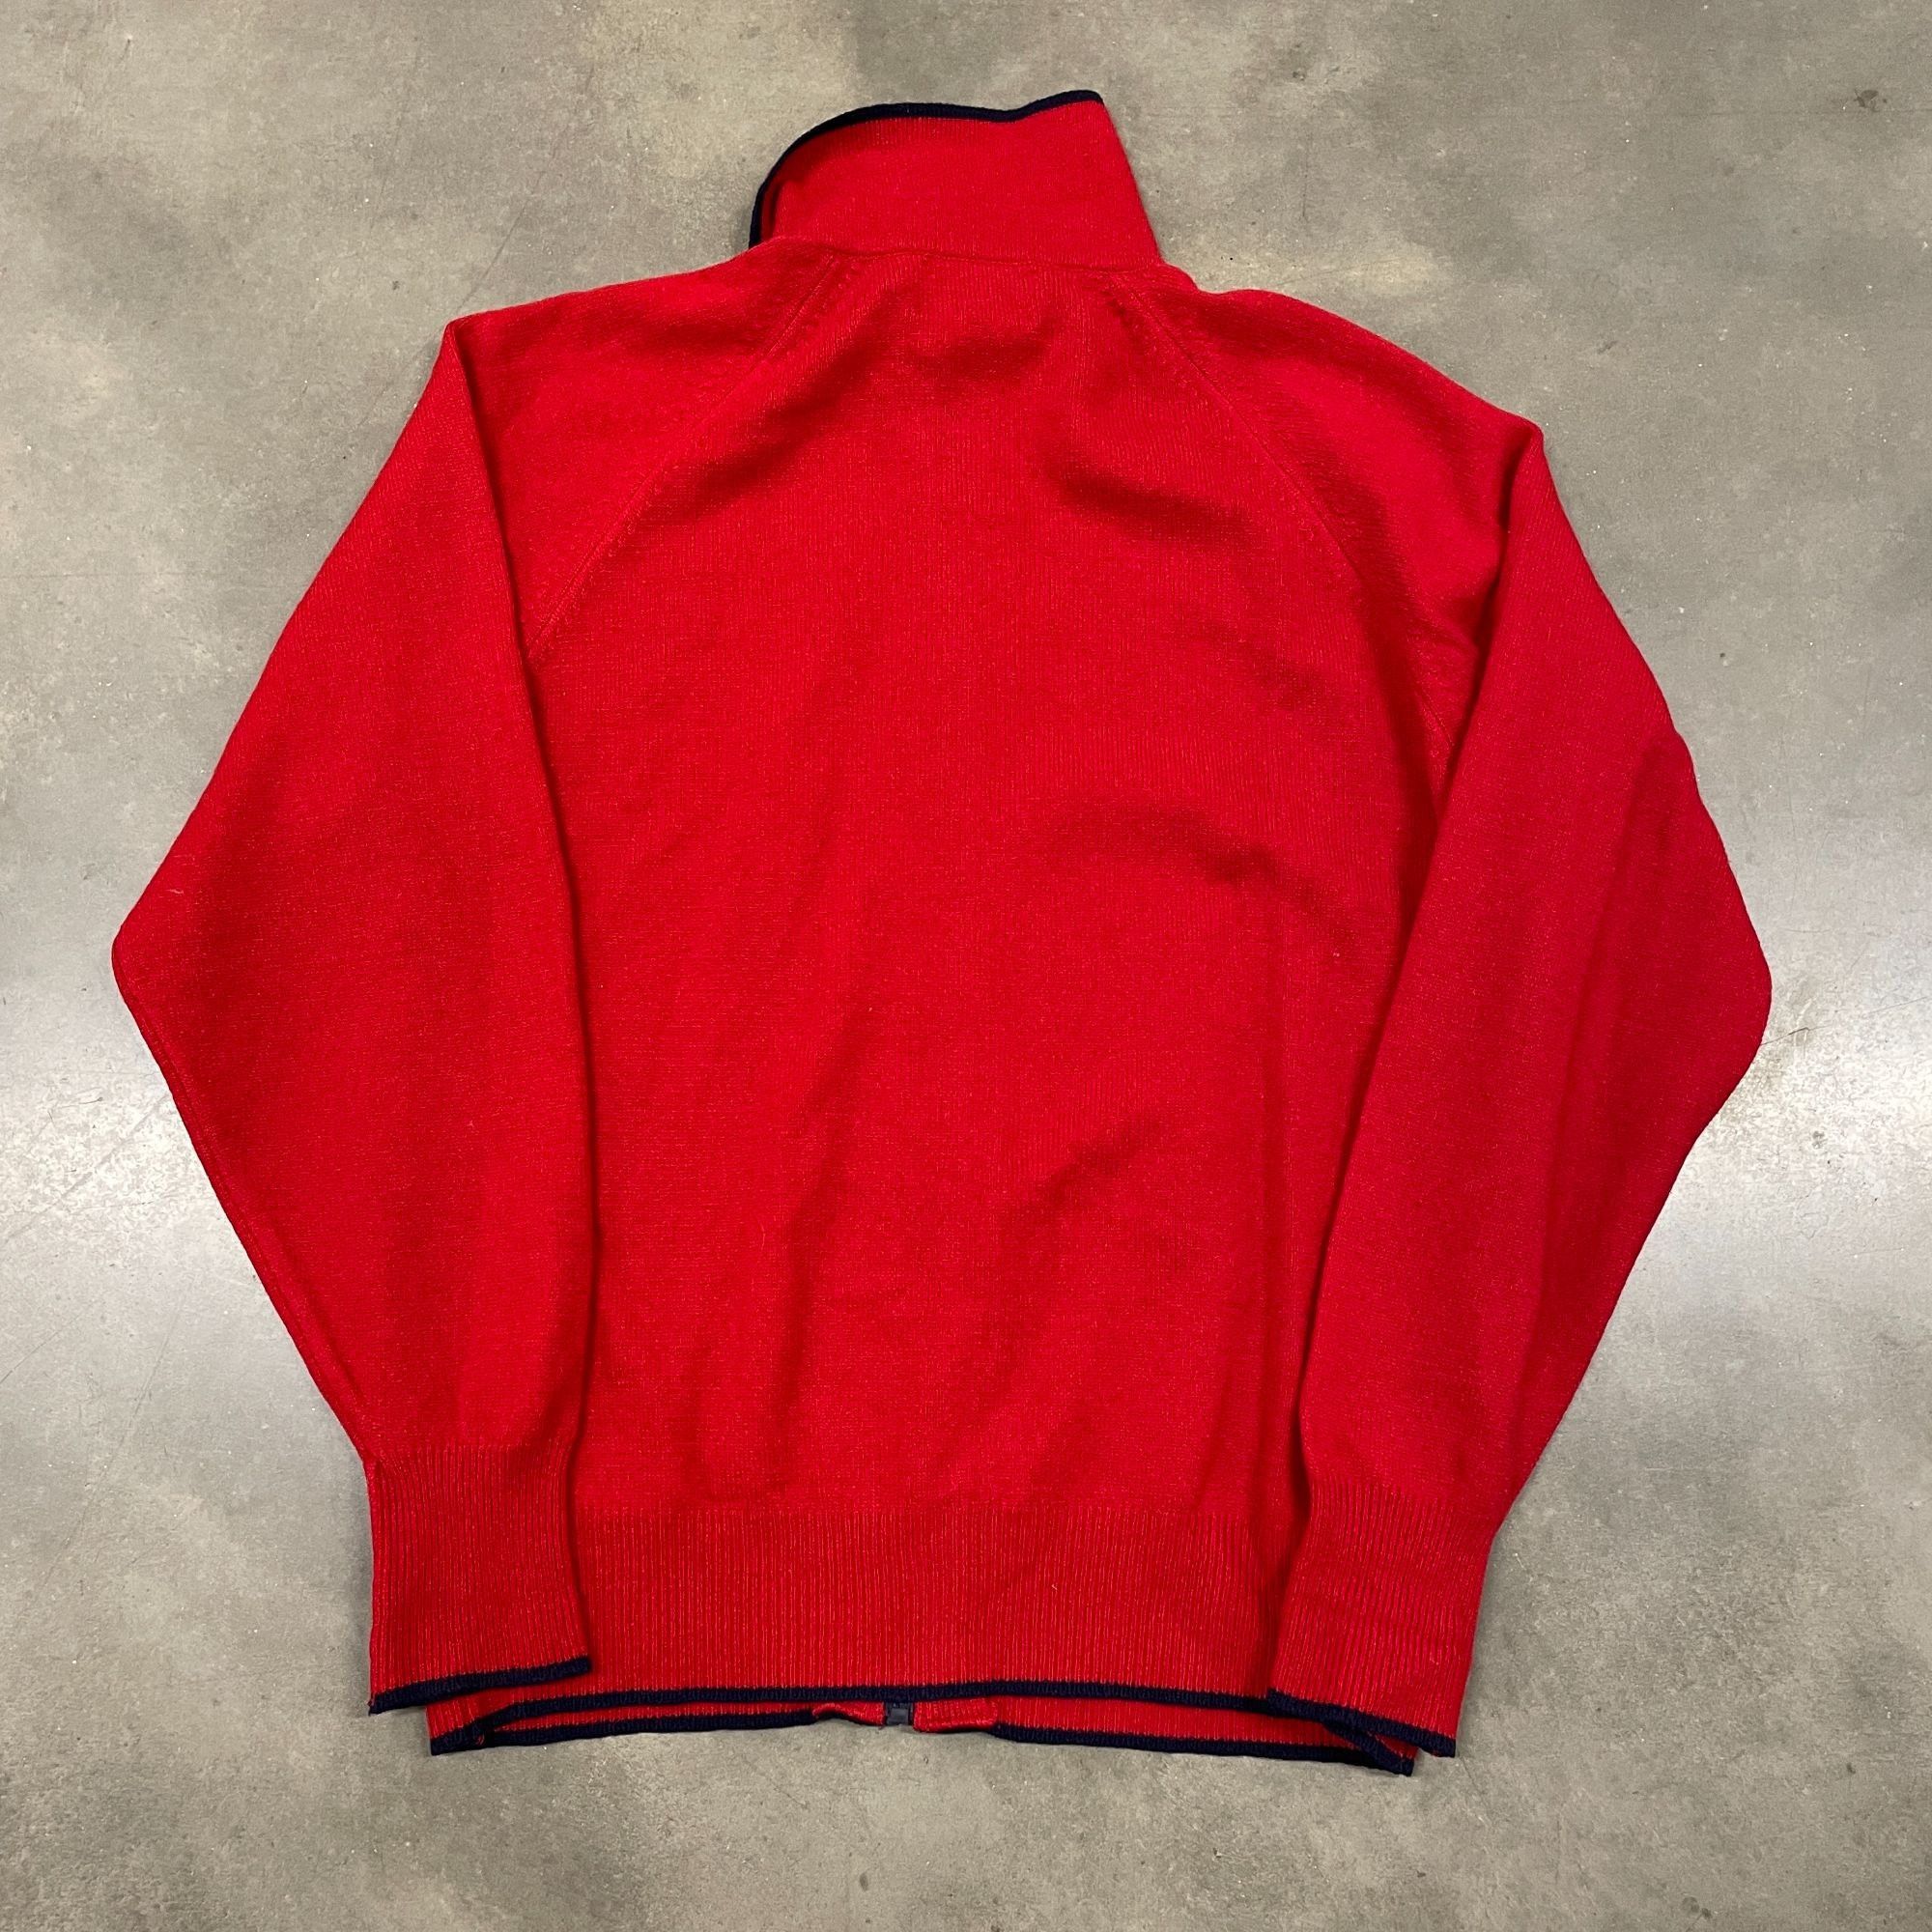 Vintage 60s VTG Red Wool Puritan Aquaknit Wool Zip Up Sweater XL Red Size US XL / EU 56 / 4 - 8 Thumbnail